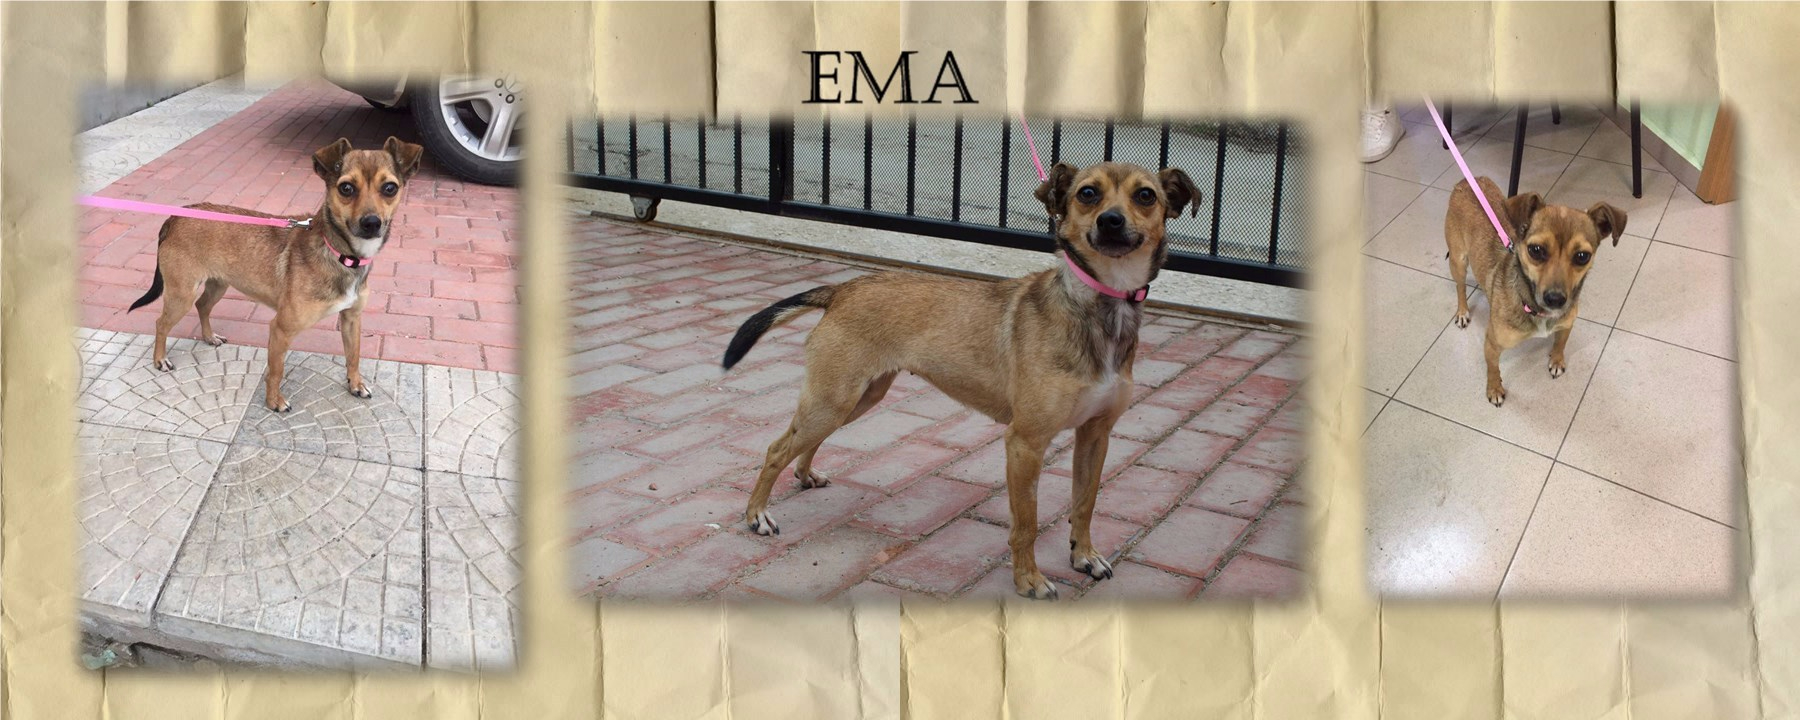 Emma – Adoptiert!